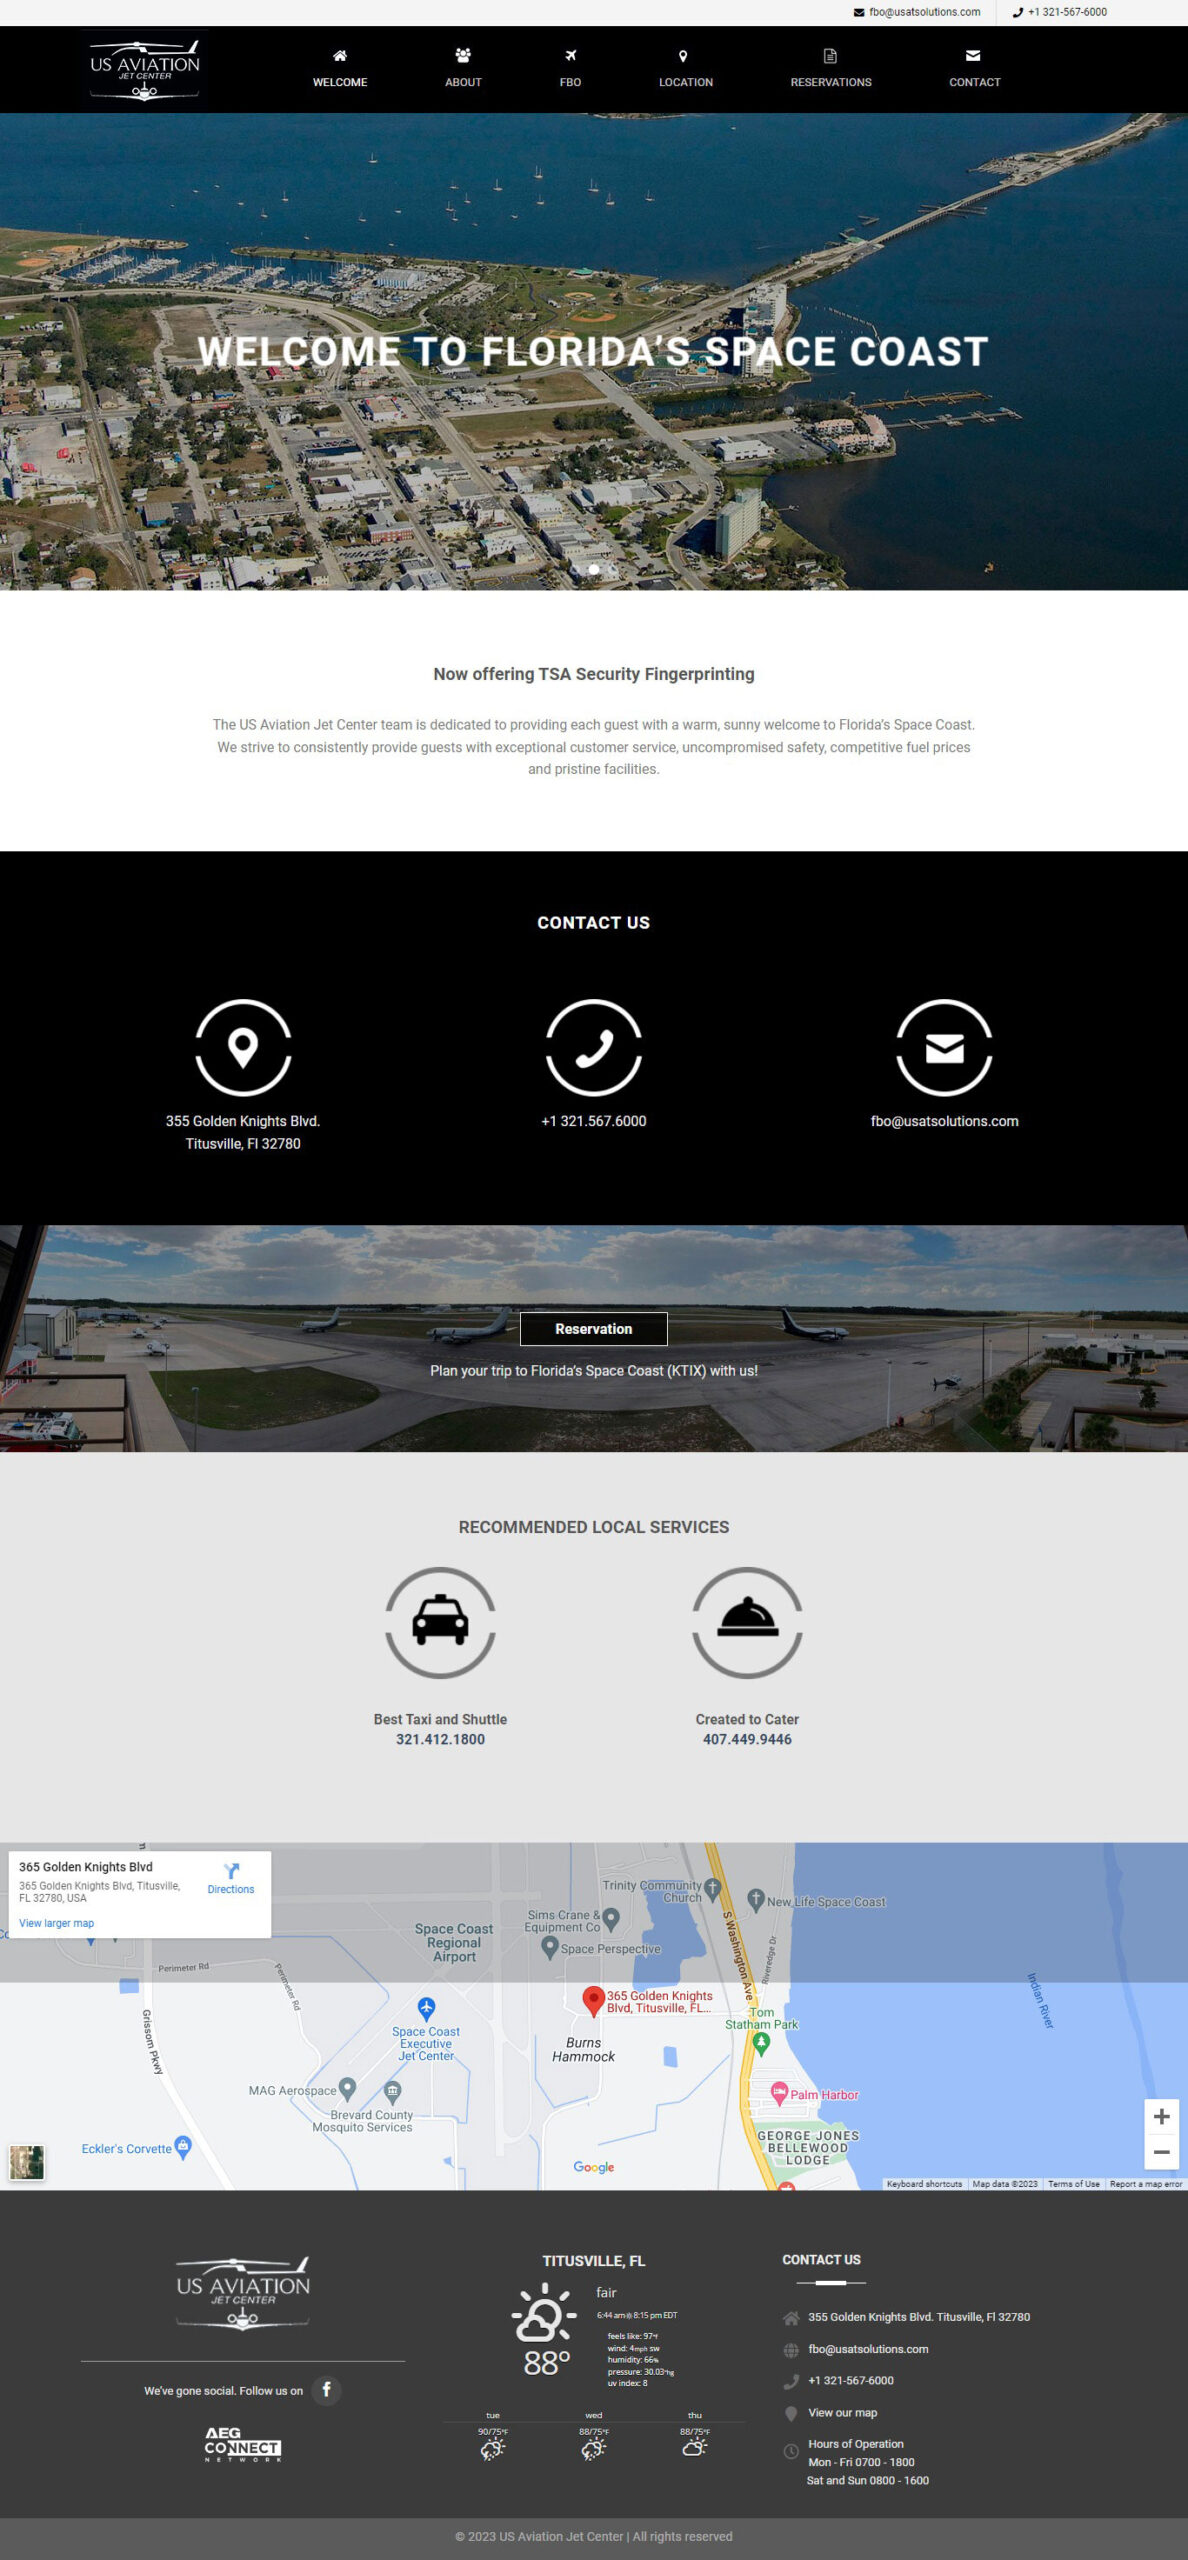 Andres-Jaramillo-Consultor-Web-SEO-Portafolio-US-Aviation-Jet-Center_home